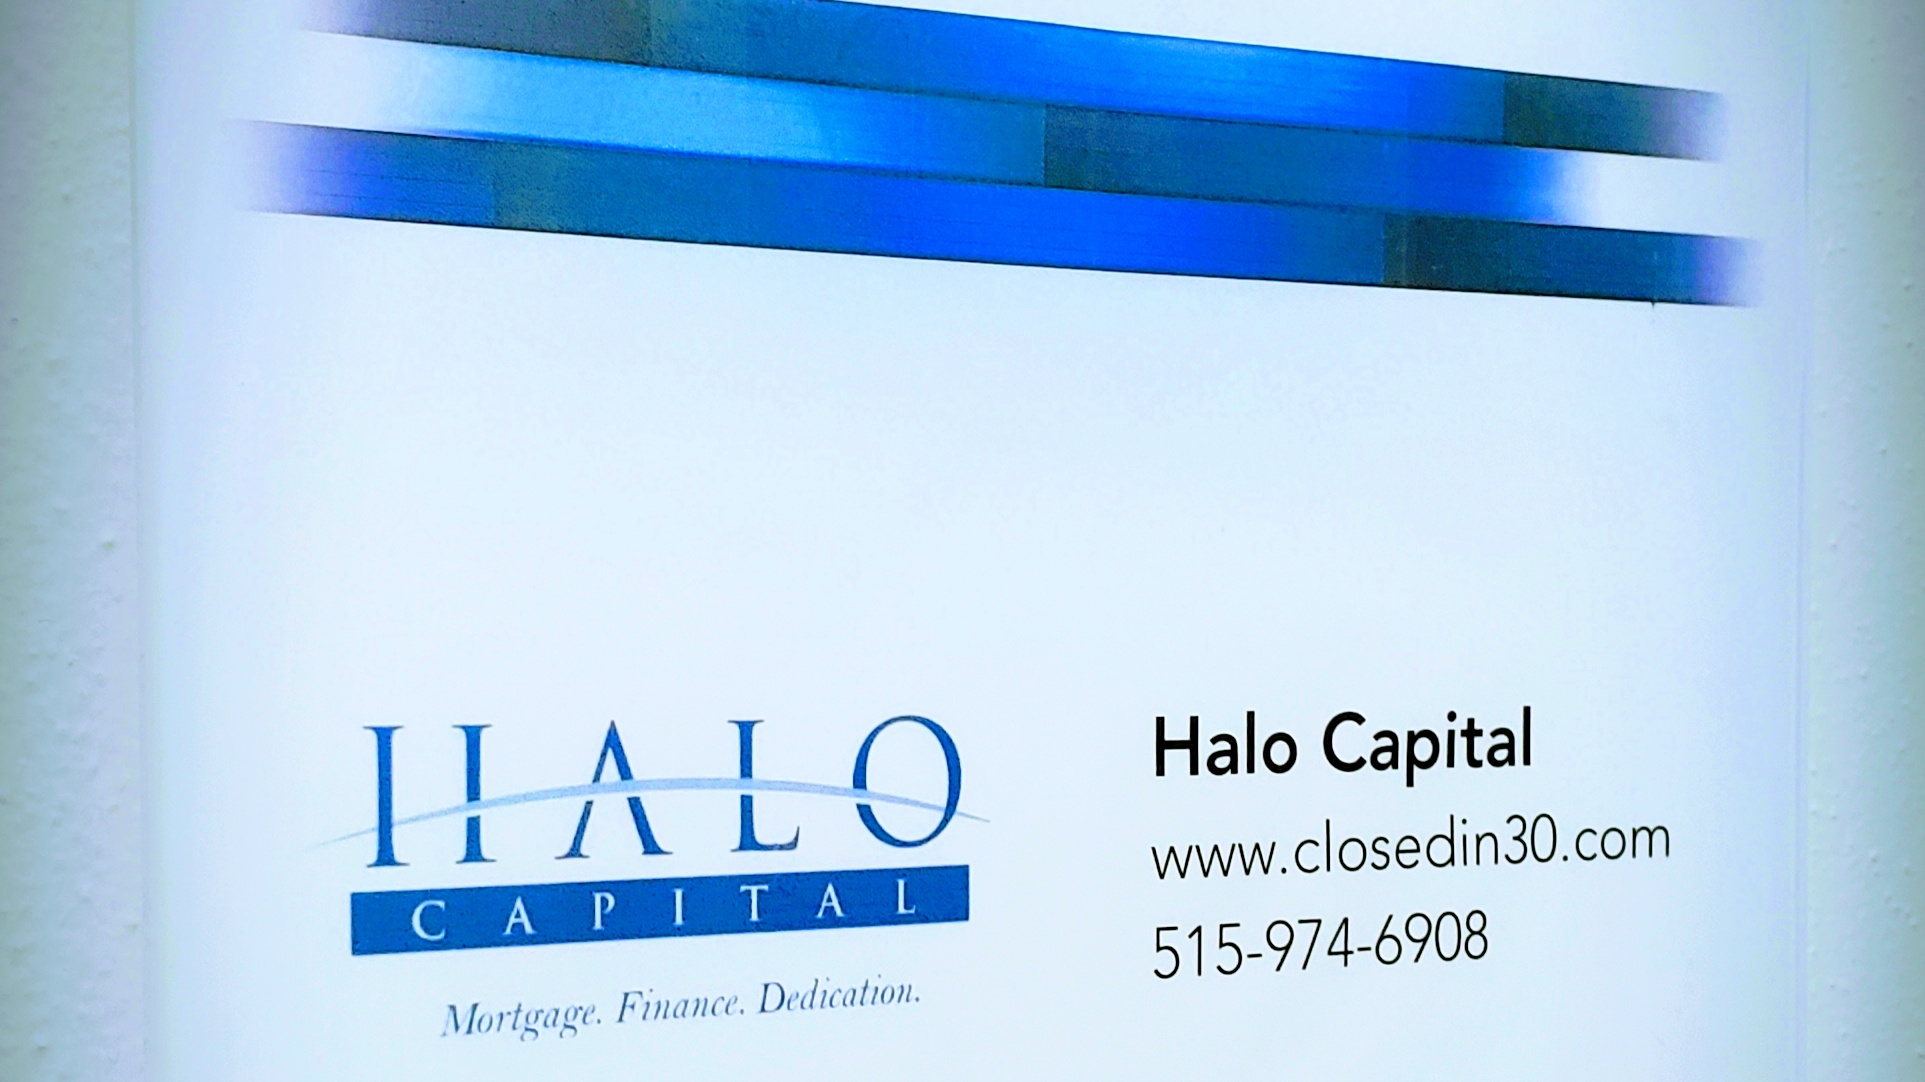 HALO Capital